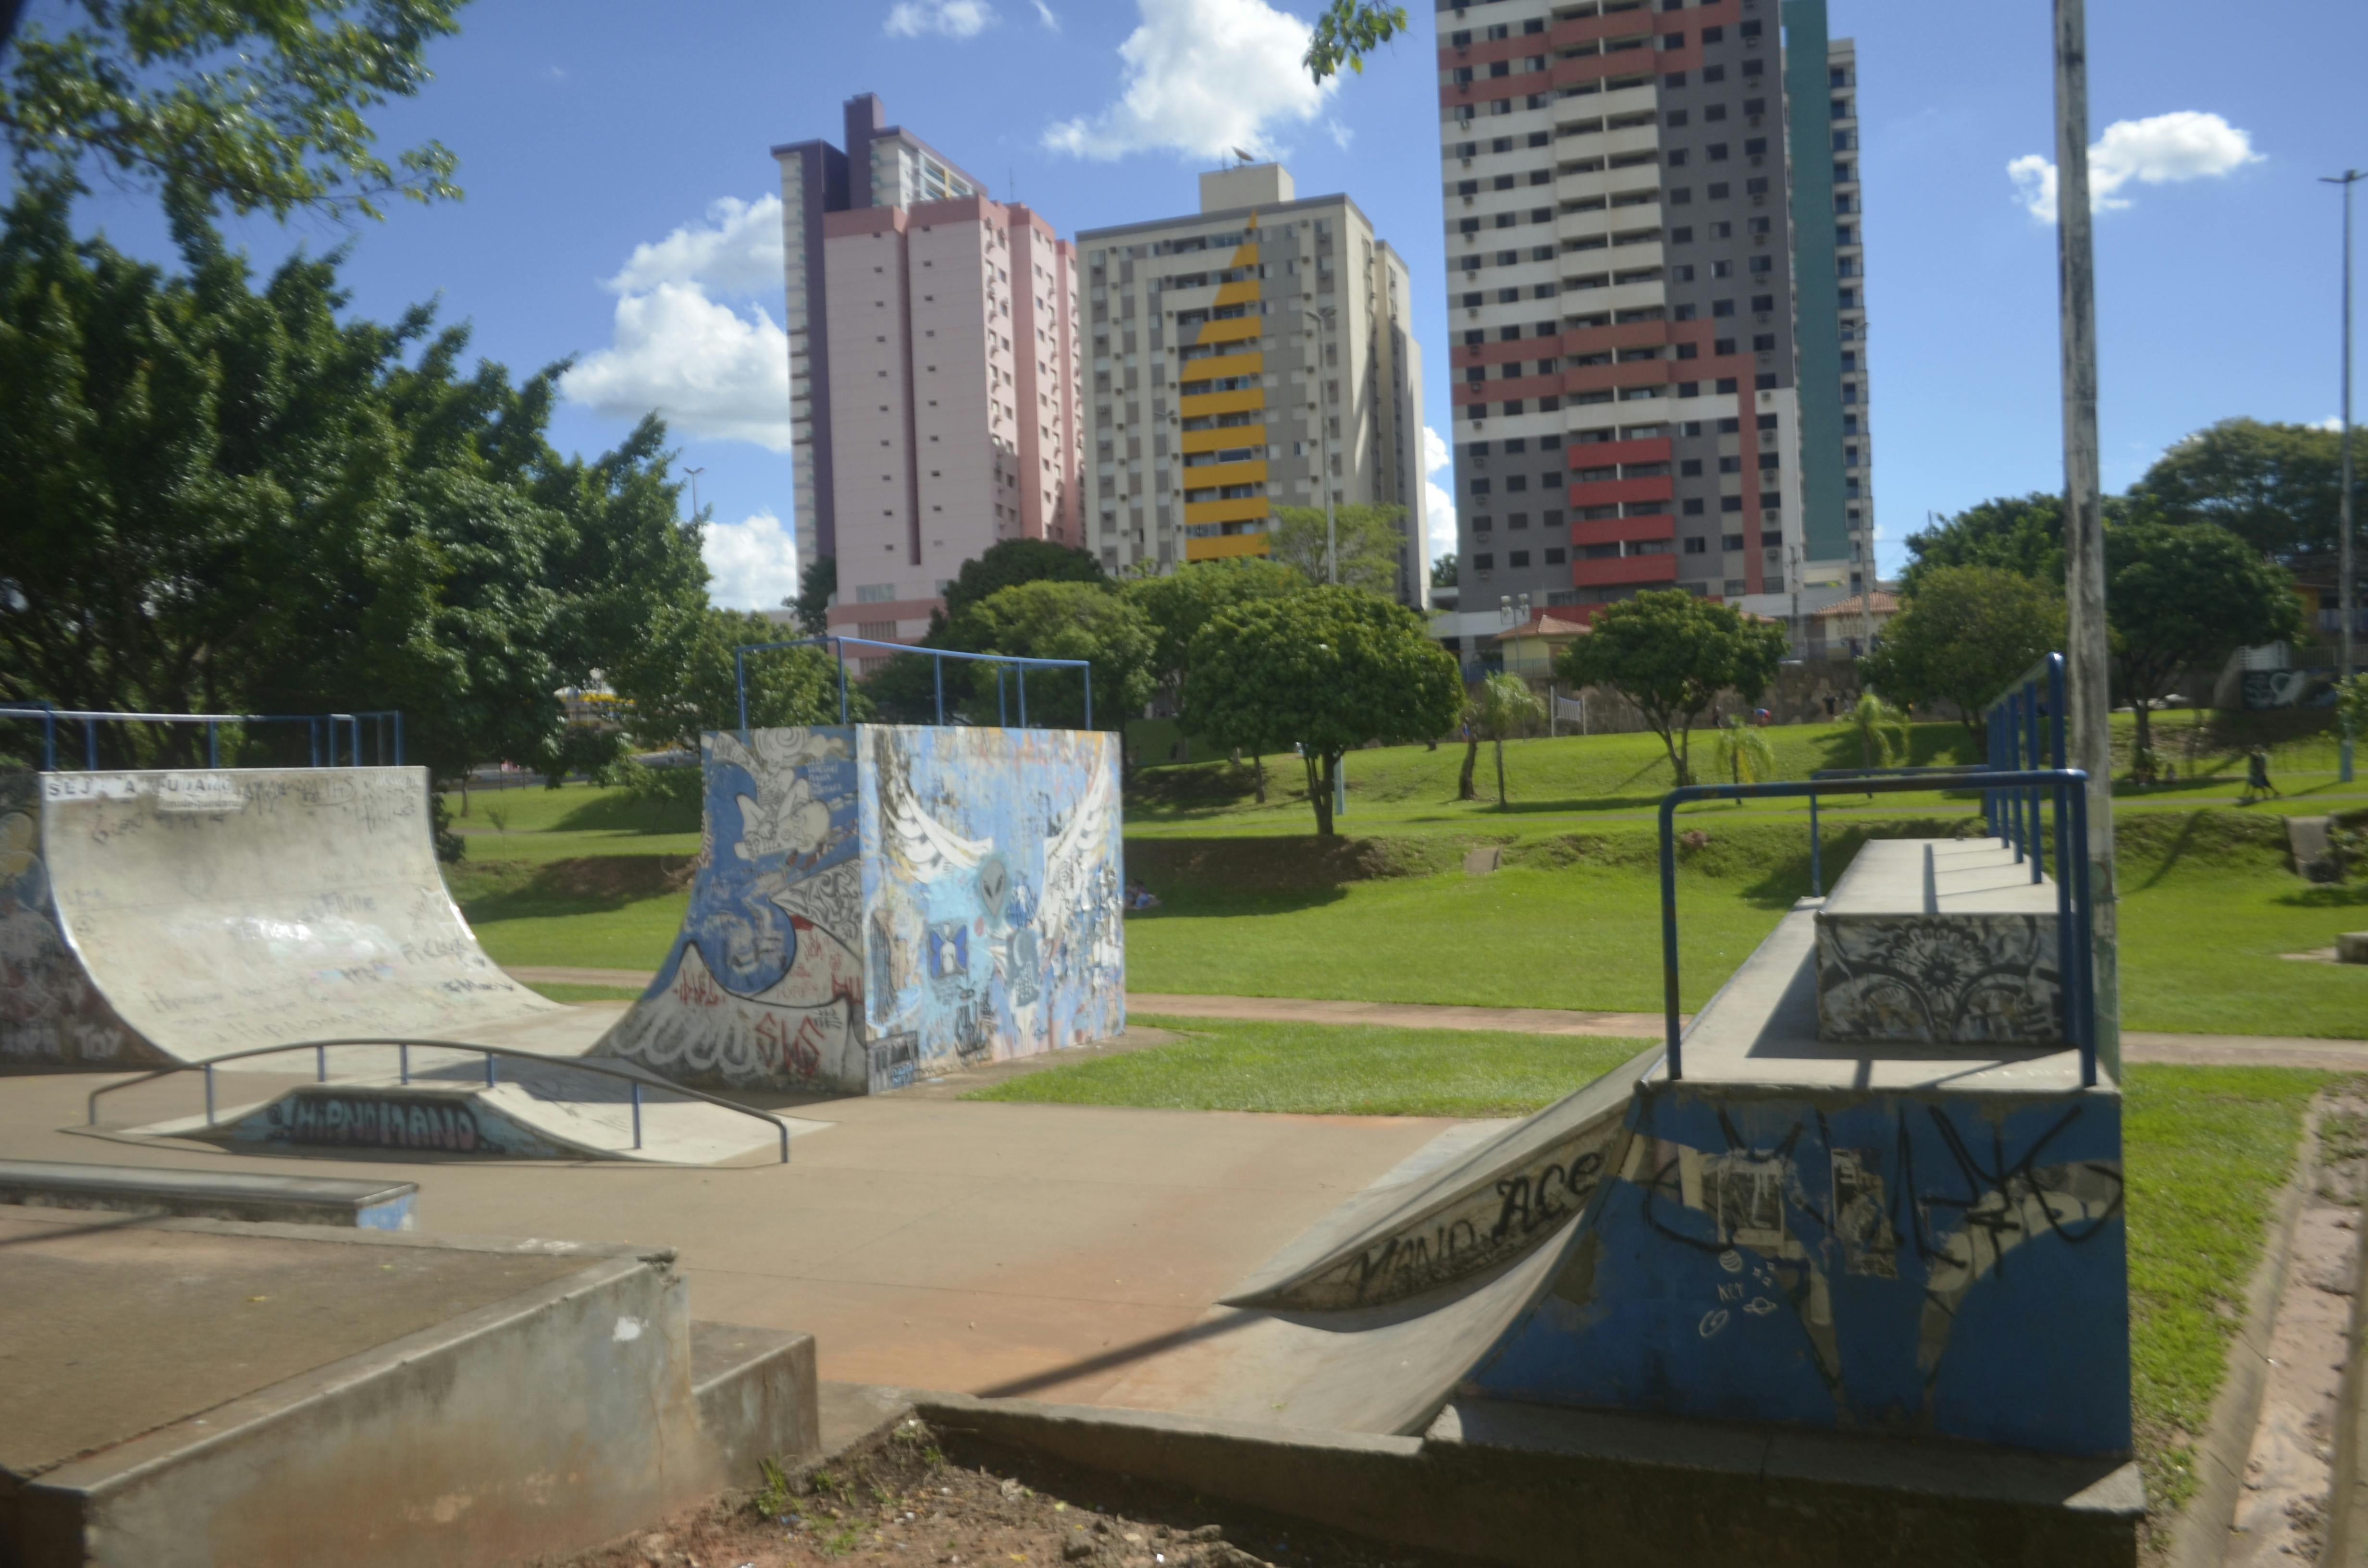 Free stock photo of skate park, skateboard